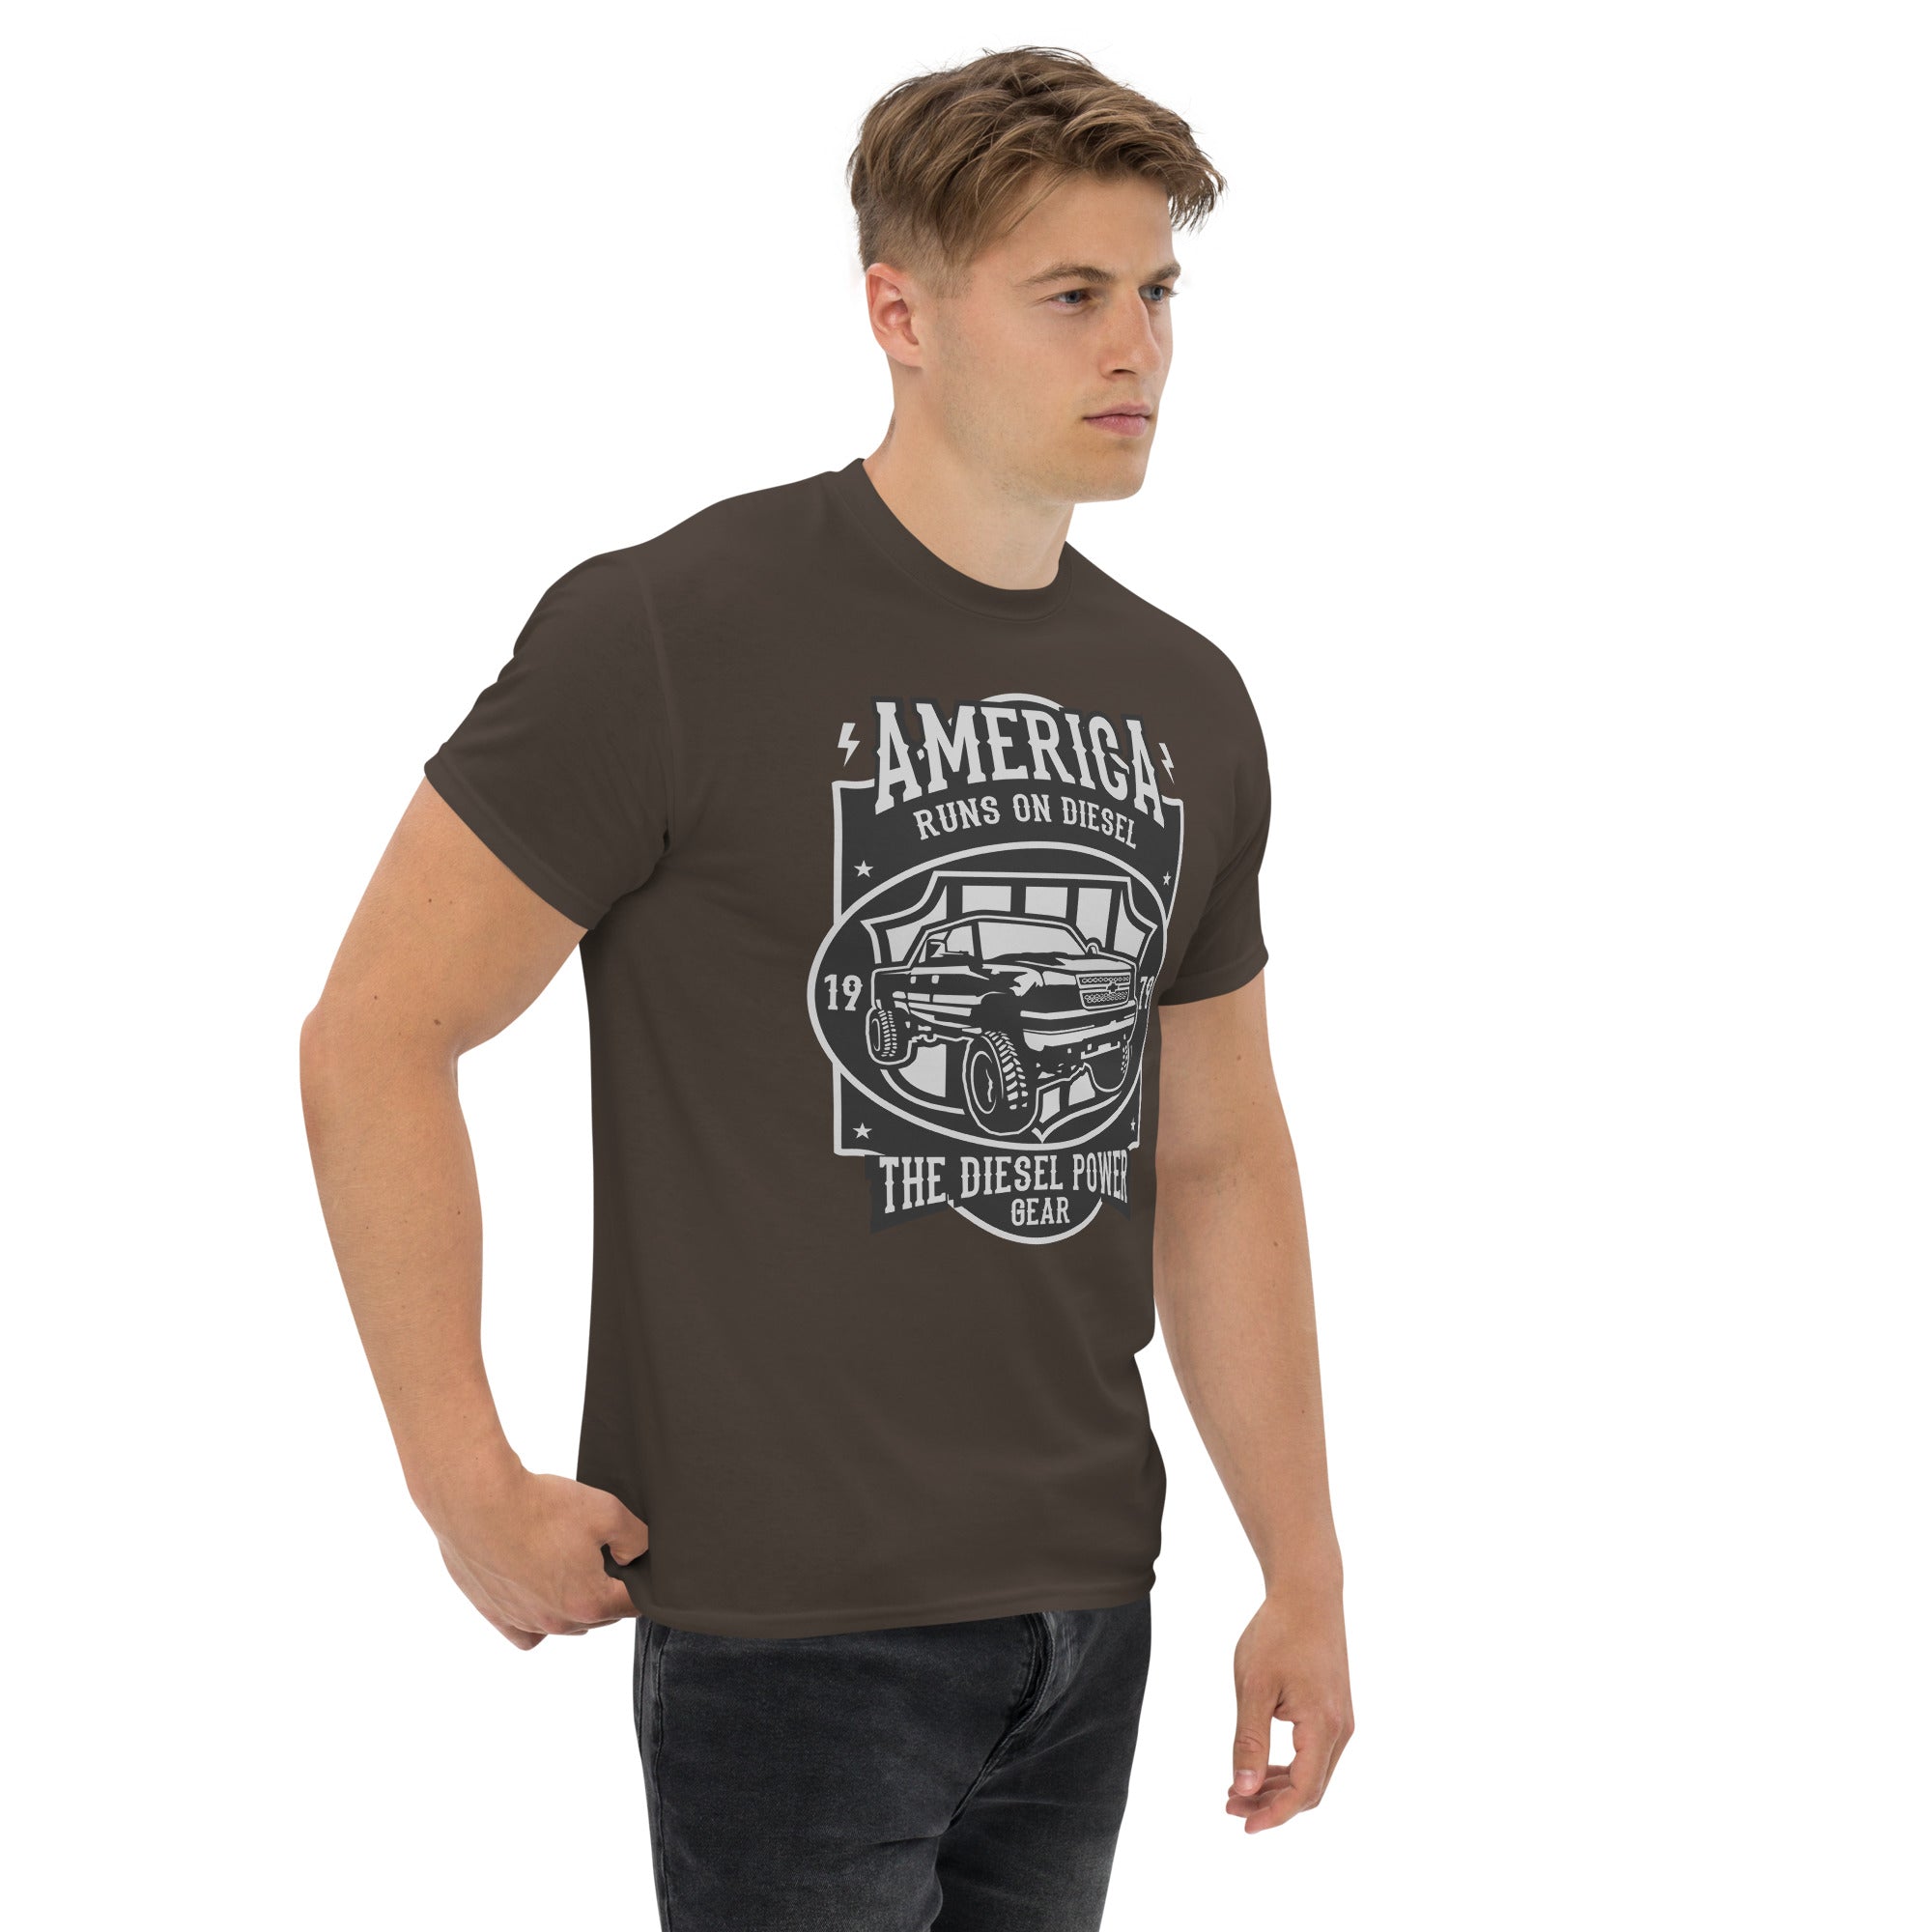 America Runs on Diesel Chevy Truck - Men's Shirt